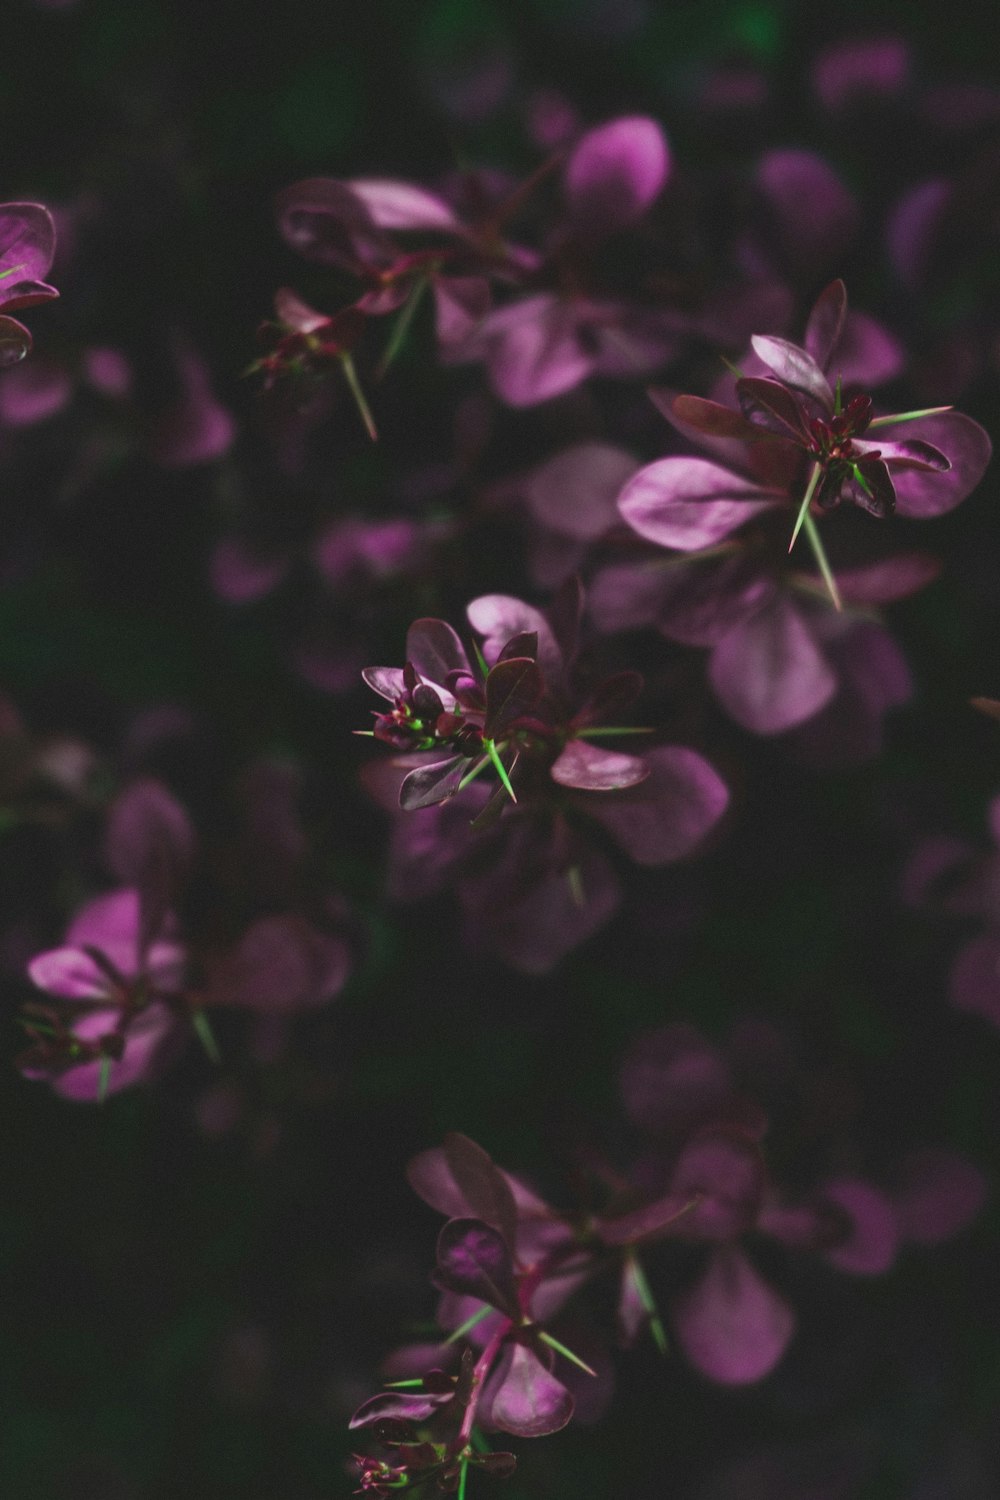 Purple flowers in tilt shift lens photo – Free Plant Image on Unsplash